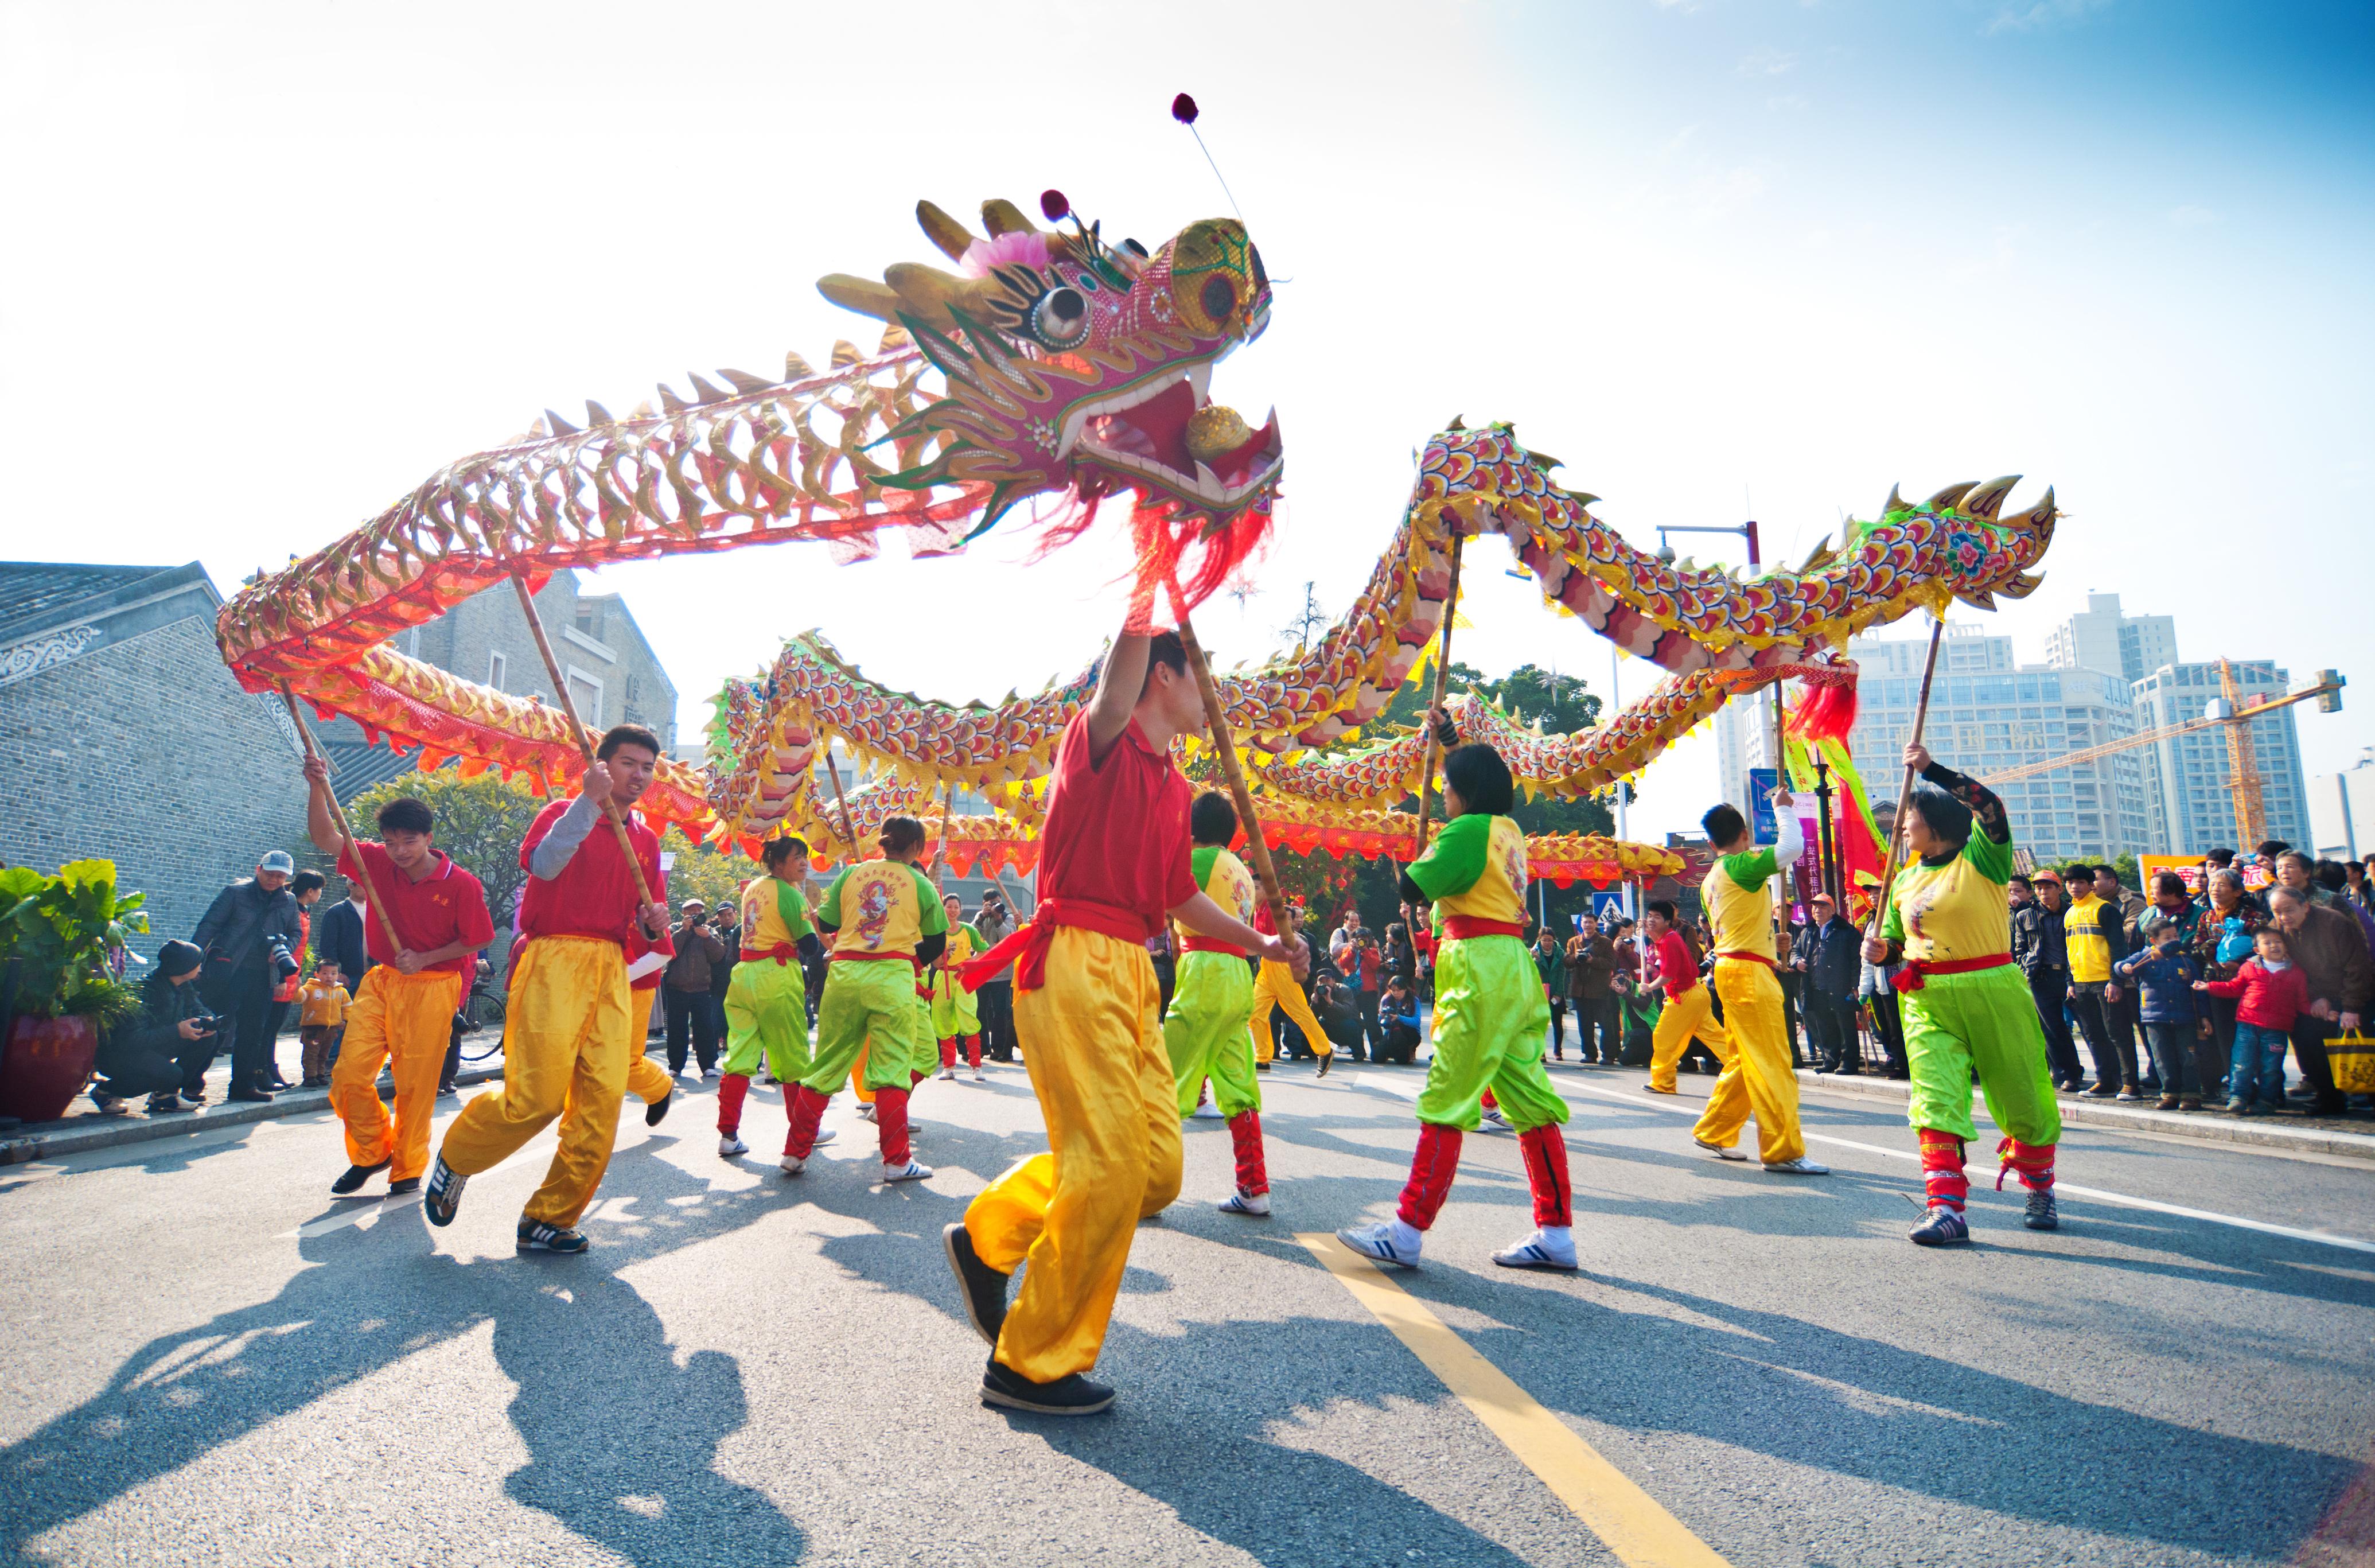 New years festival. Танец дракона в Китае. Танец дракона в Китае на новый год. Китайский новый год танец дракона. Фестиваль дракона в Китае.